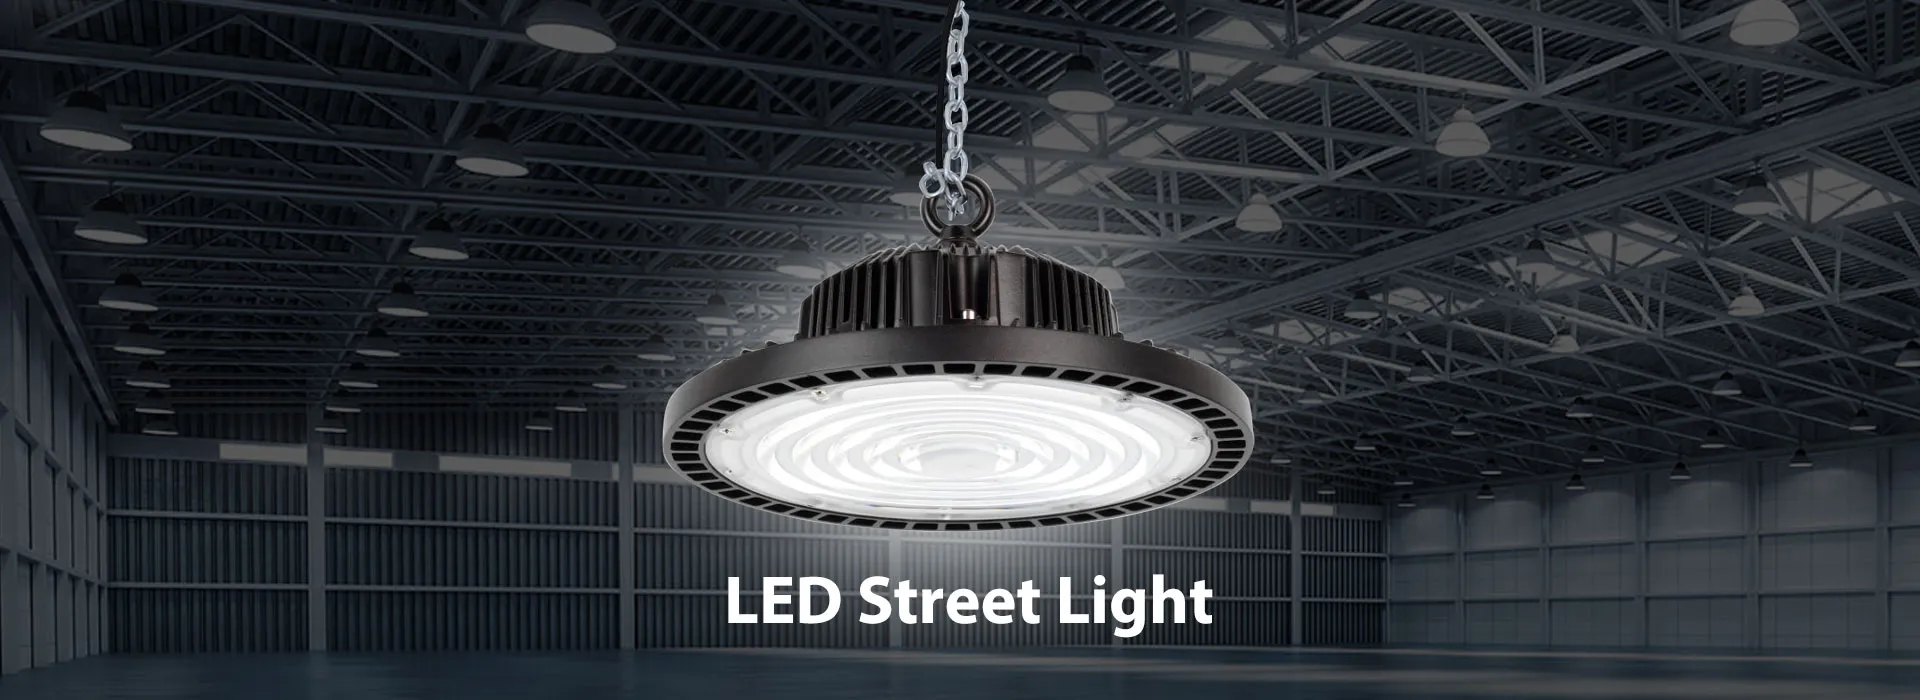 Kínai LED utcai lámpagyár